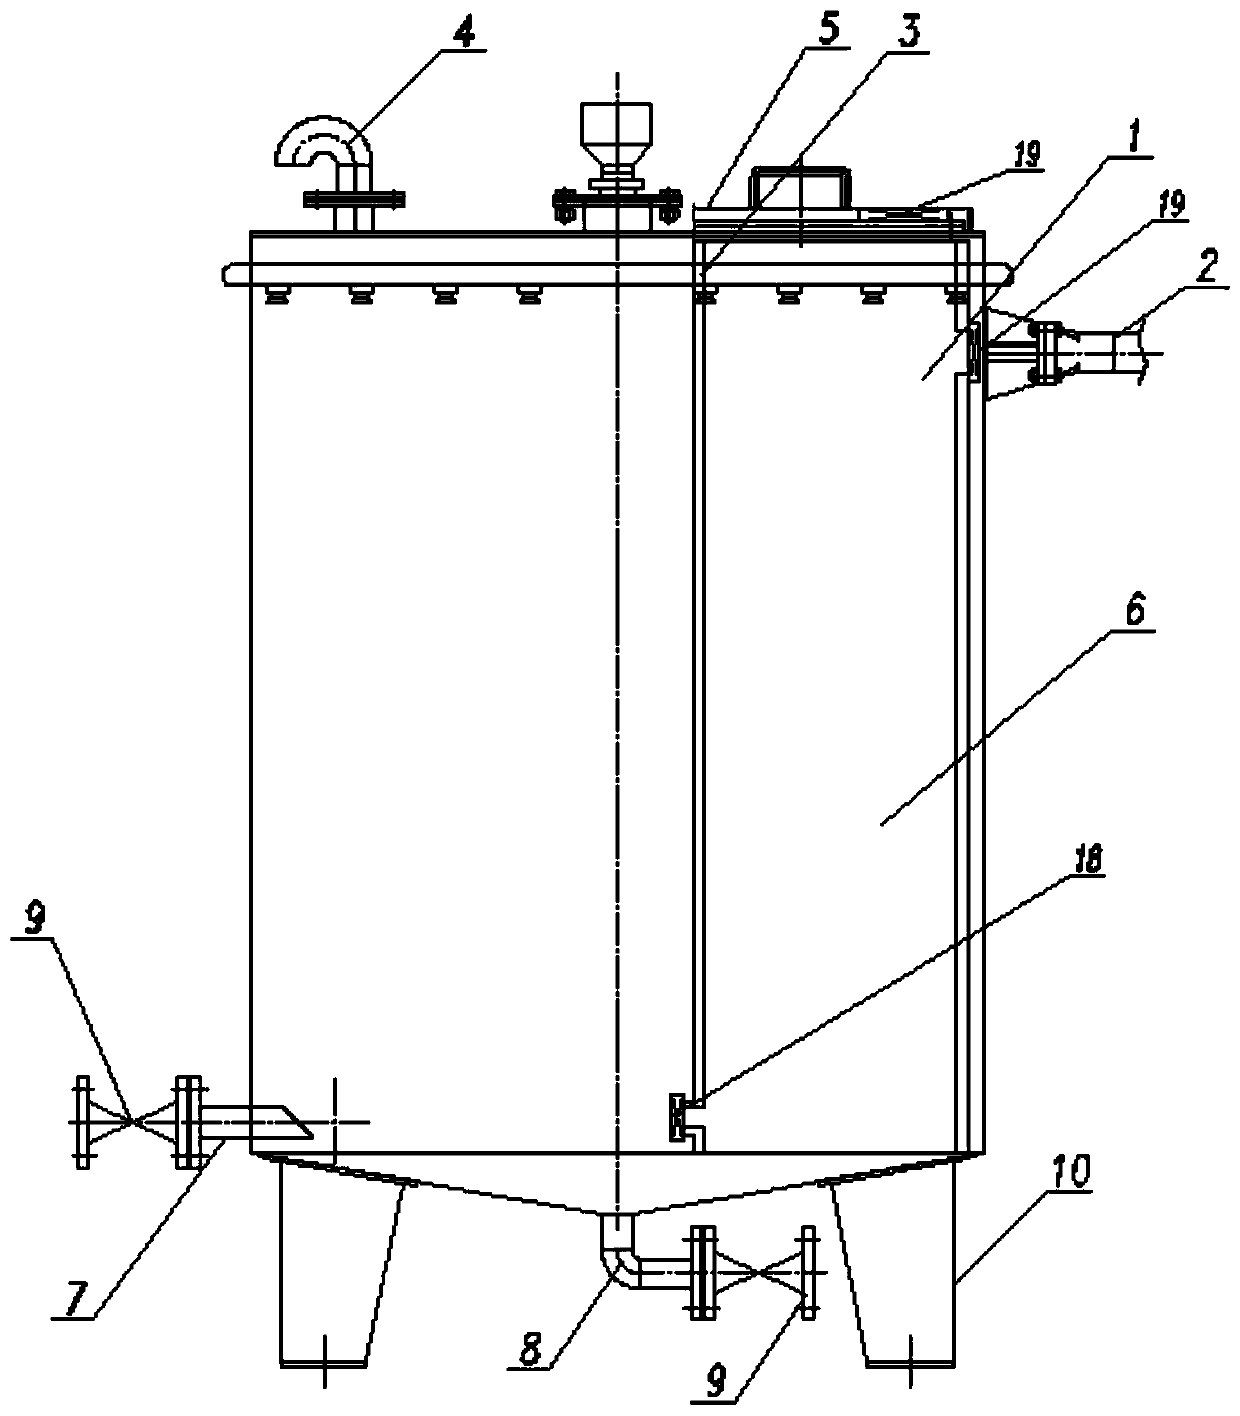 An outdoor liquid storage tank